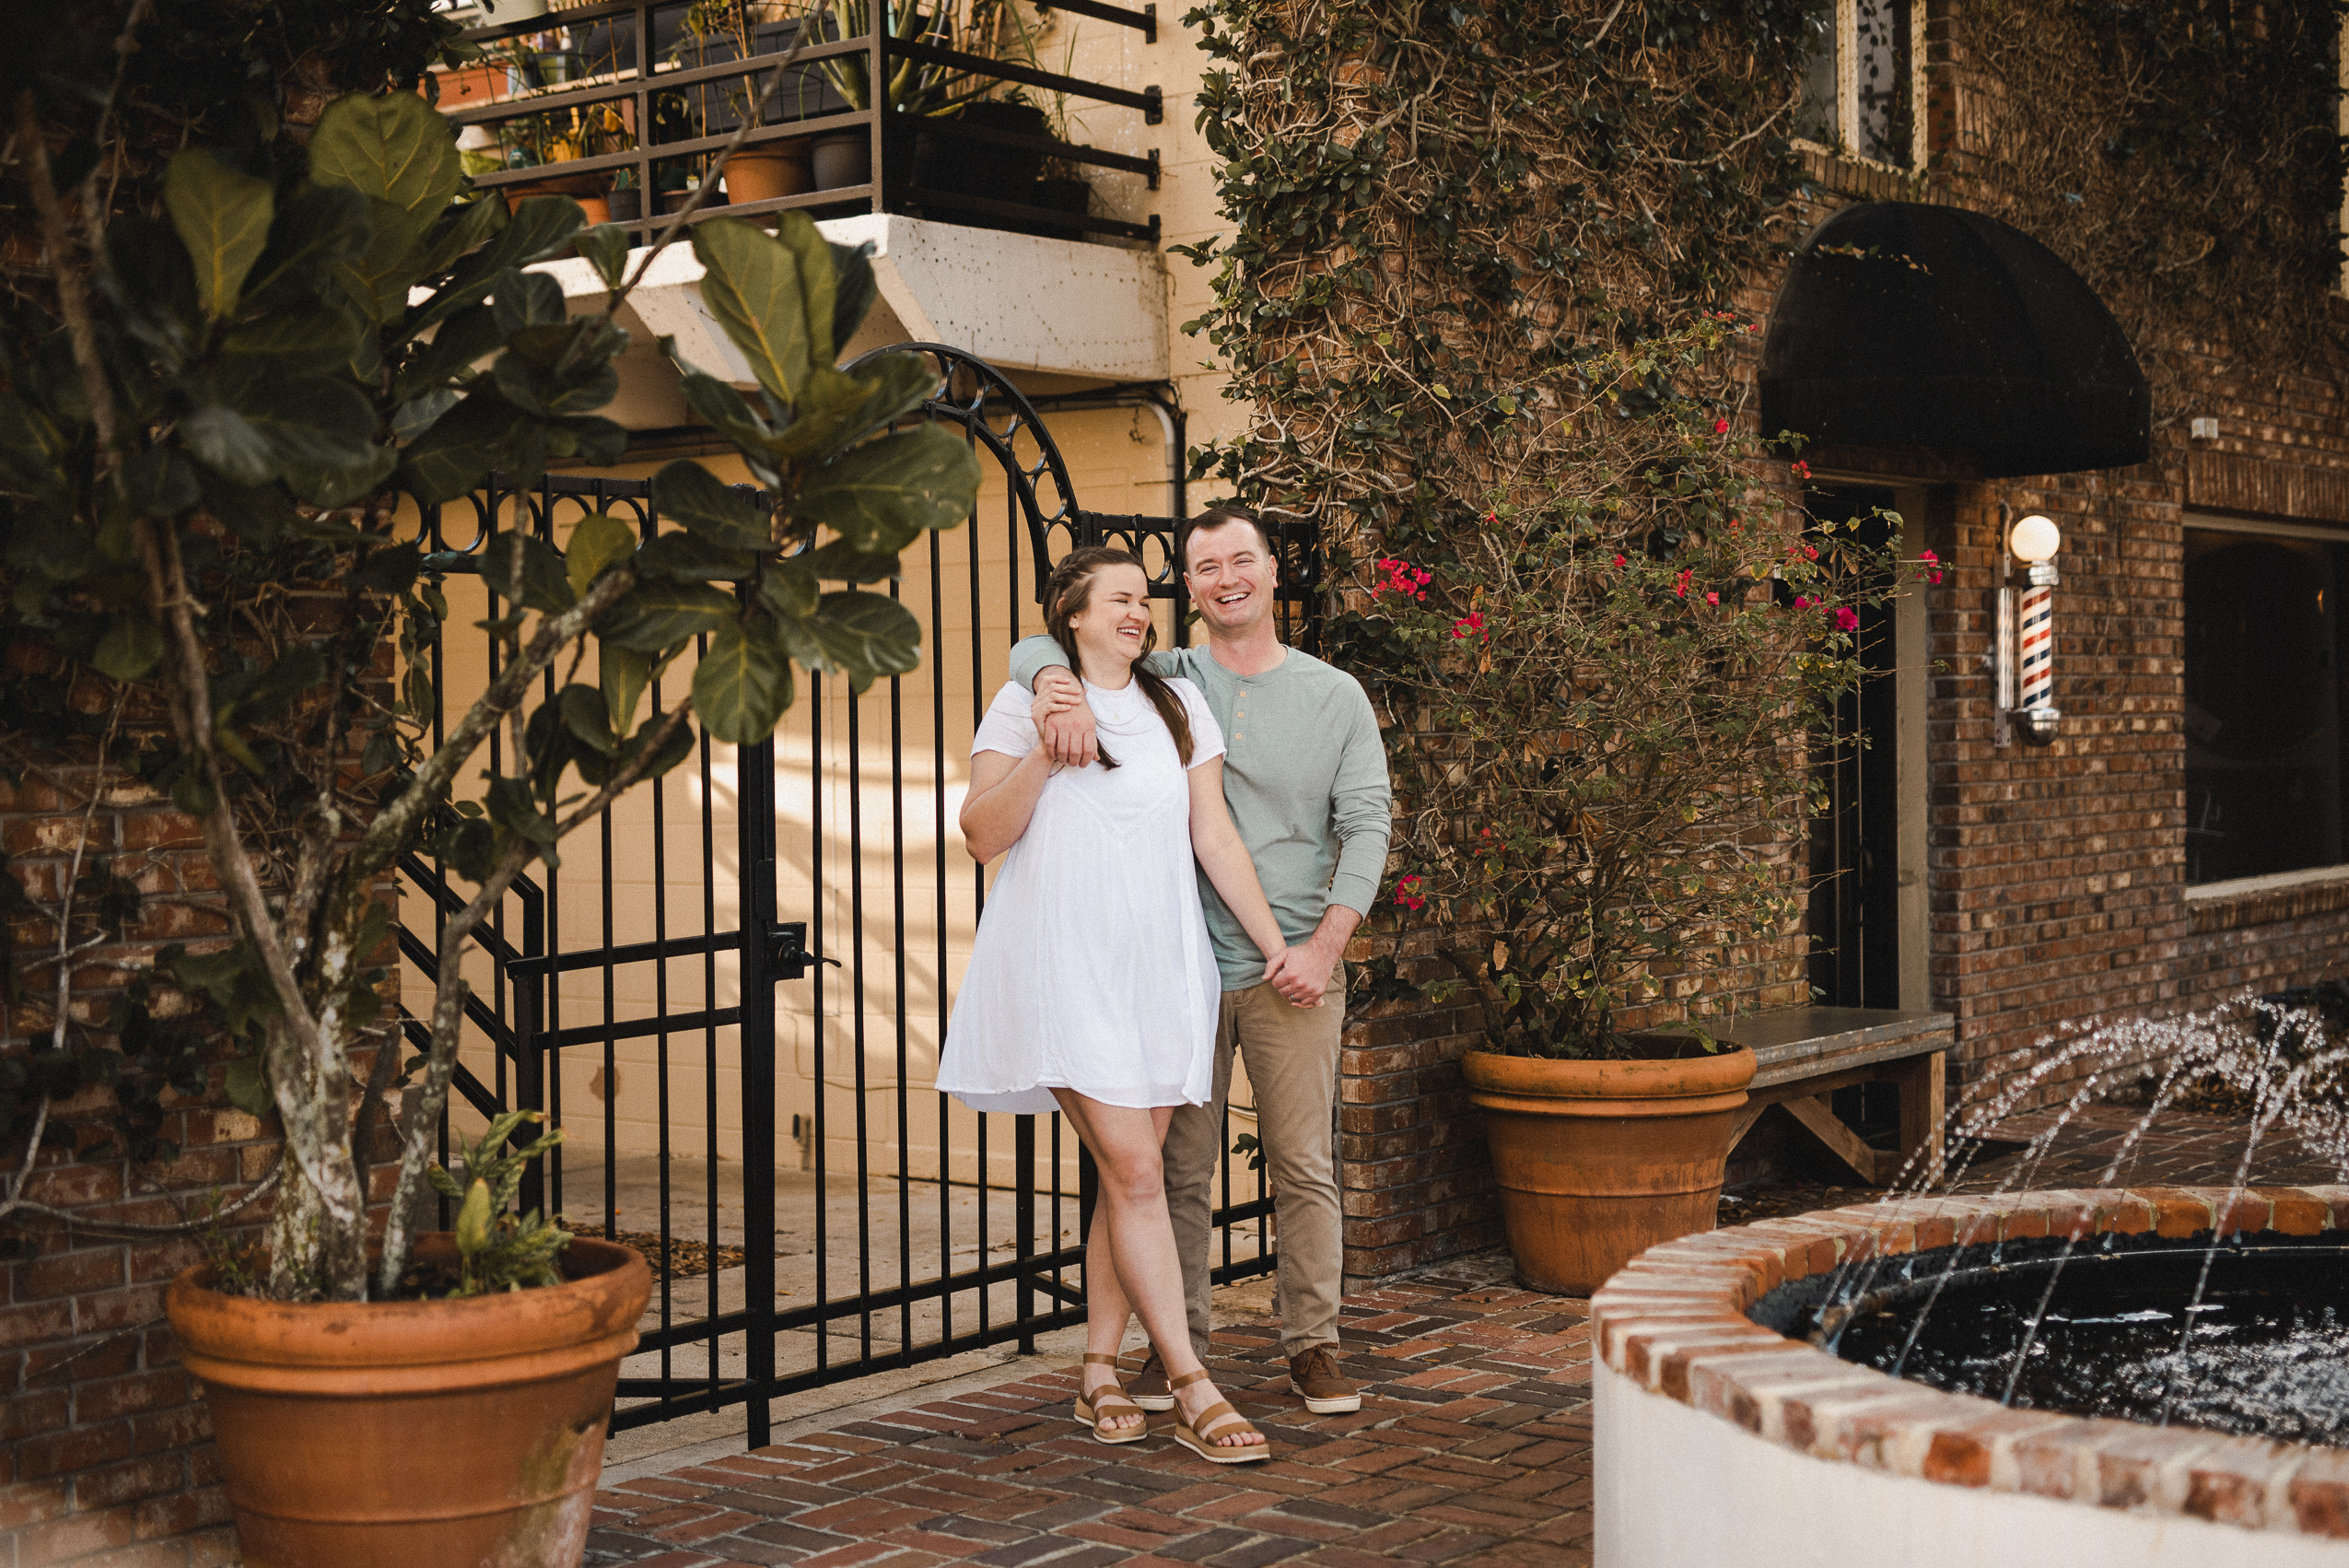 Local Winter Park Orlando Florida Couples Enagagement Destination Elopement Intimate Wedding Photographer